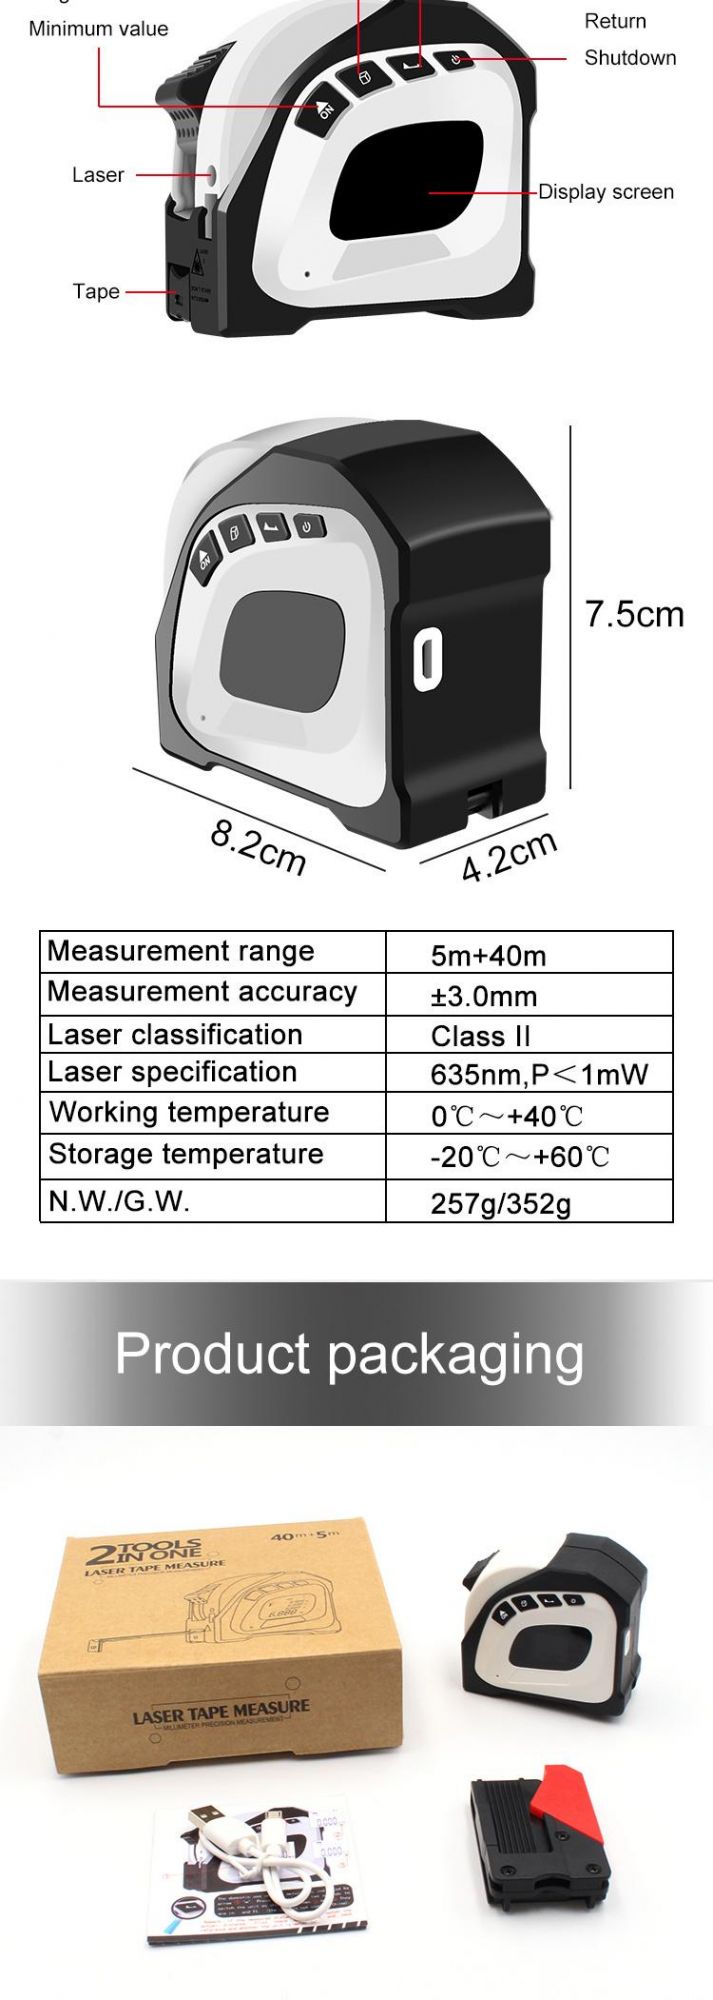 New 40m 2 in 1 Digital Laser Tape Measure